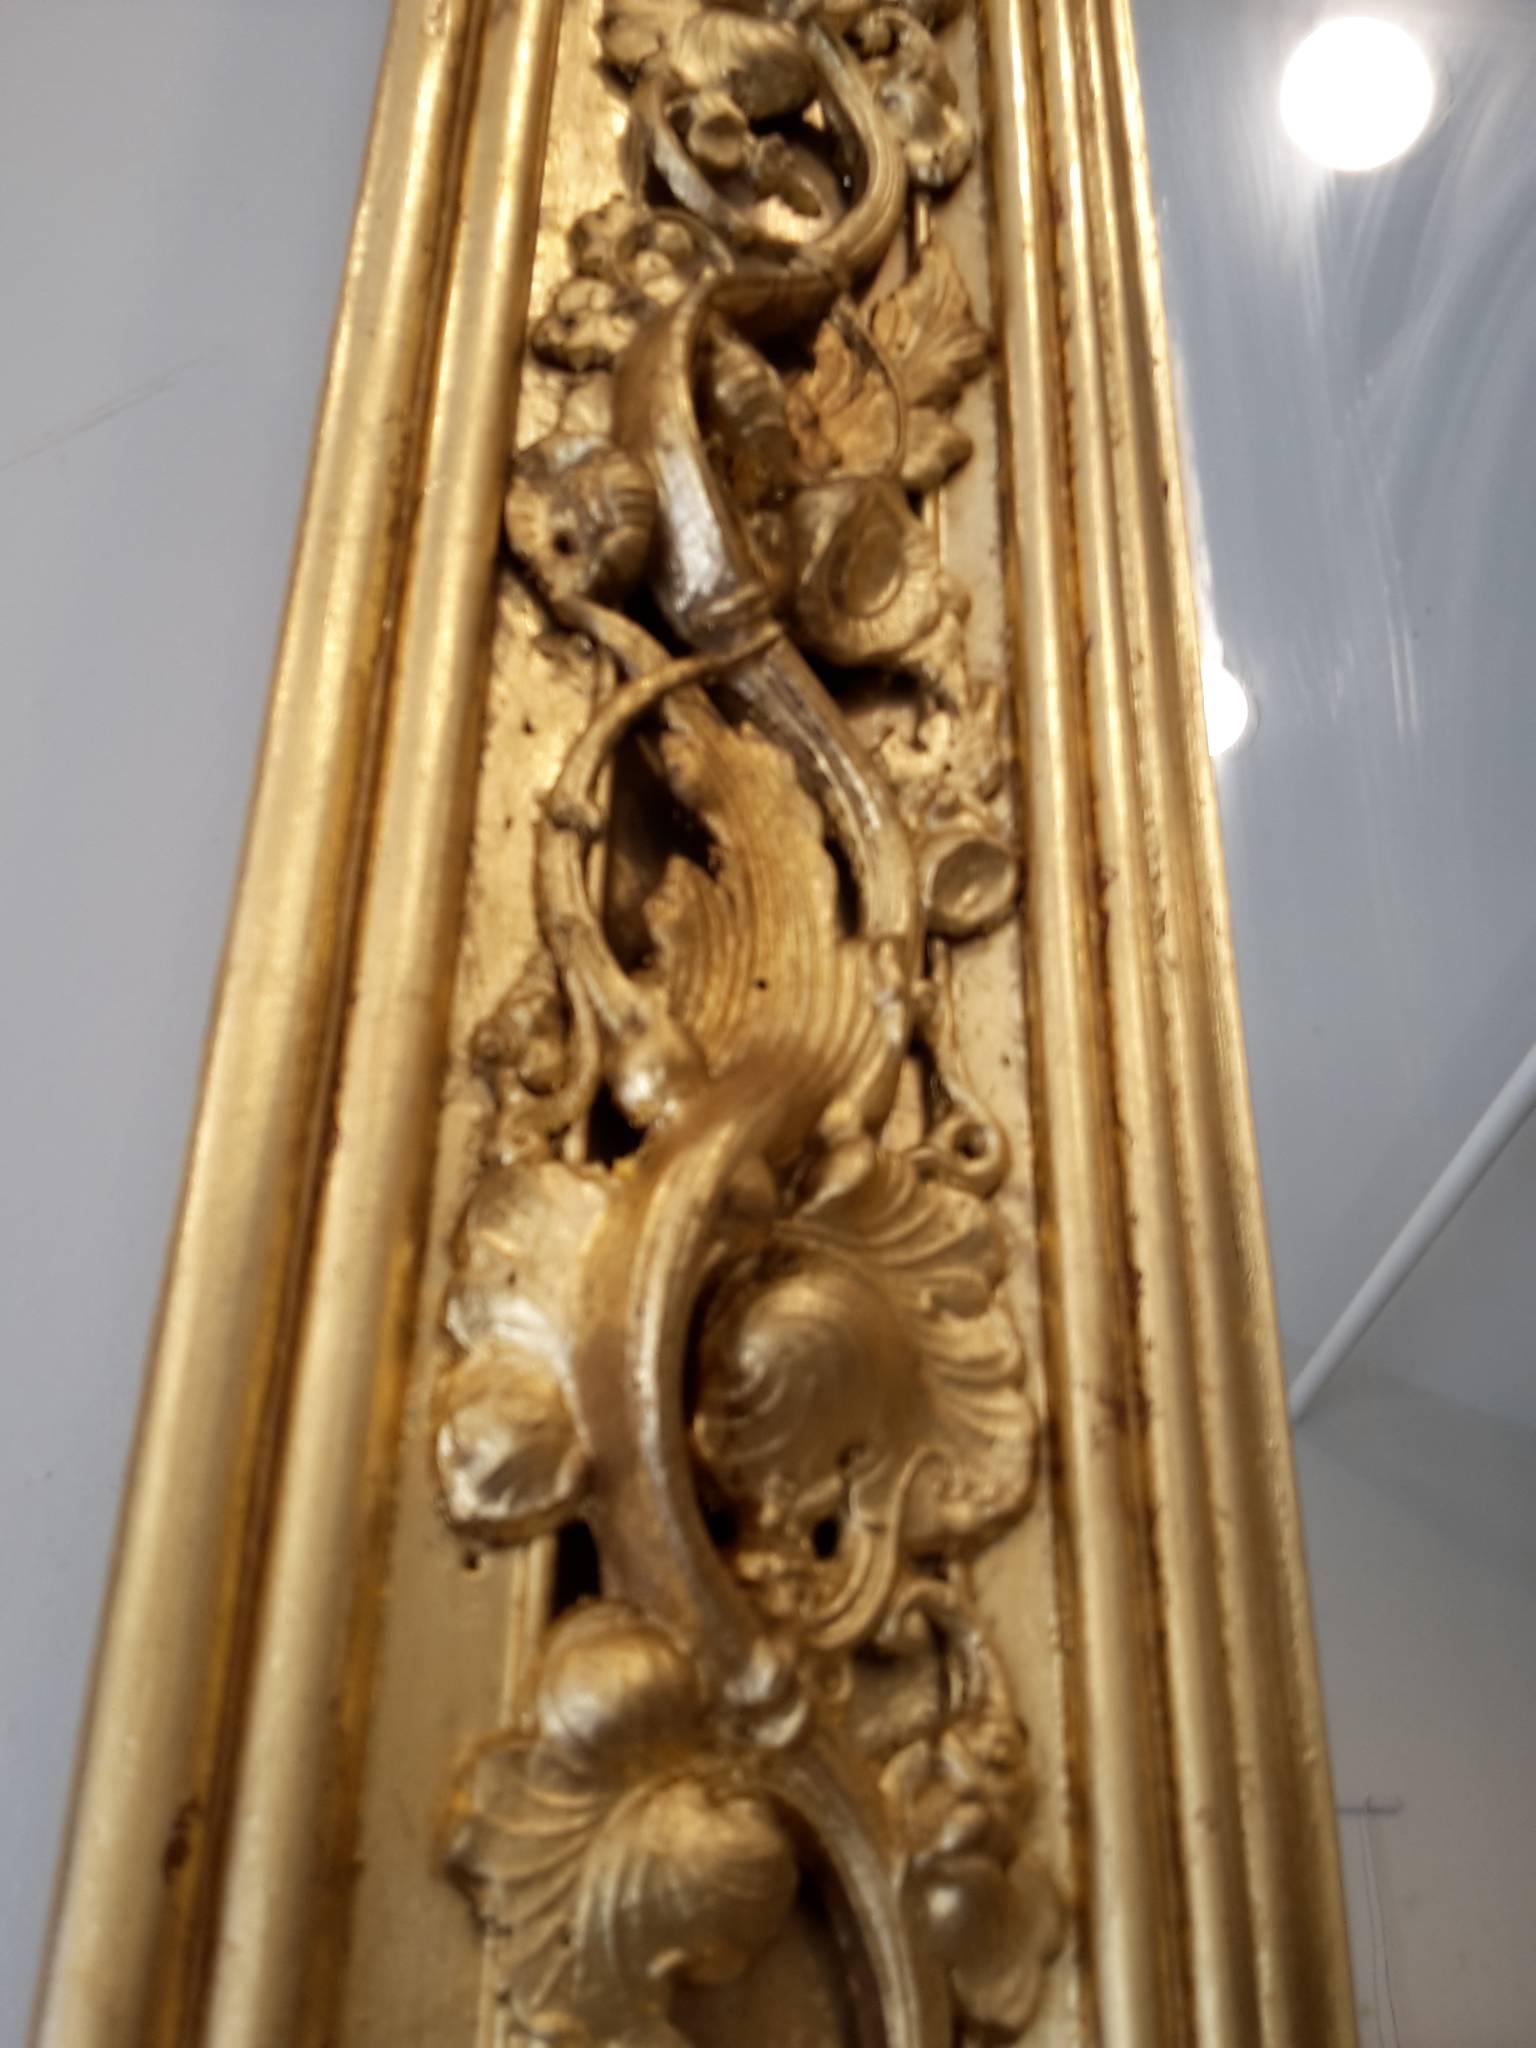 French antique mirror Napoléon III périod, mercury panel glass, very important mirror, gold metal leaf, age 1860.